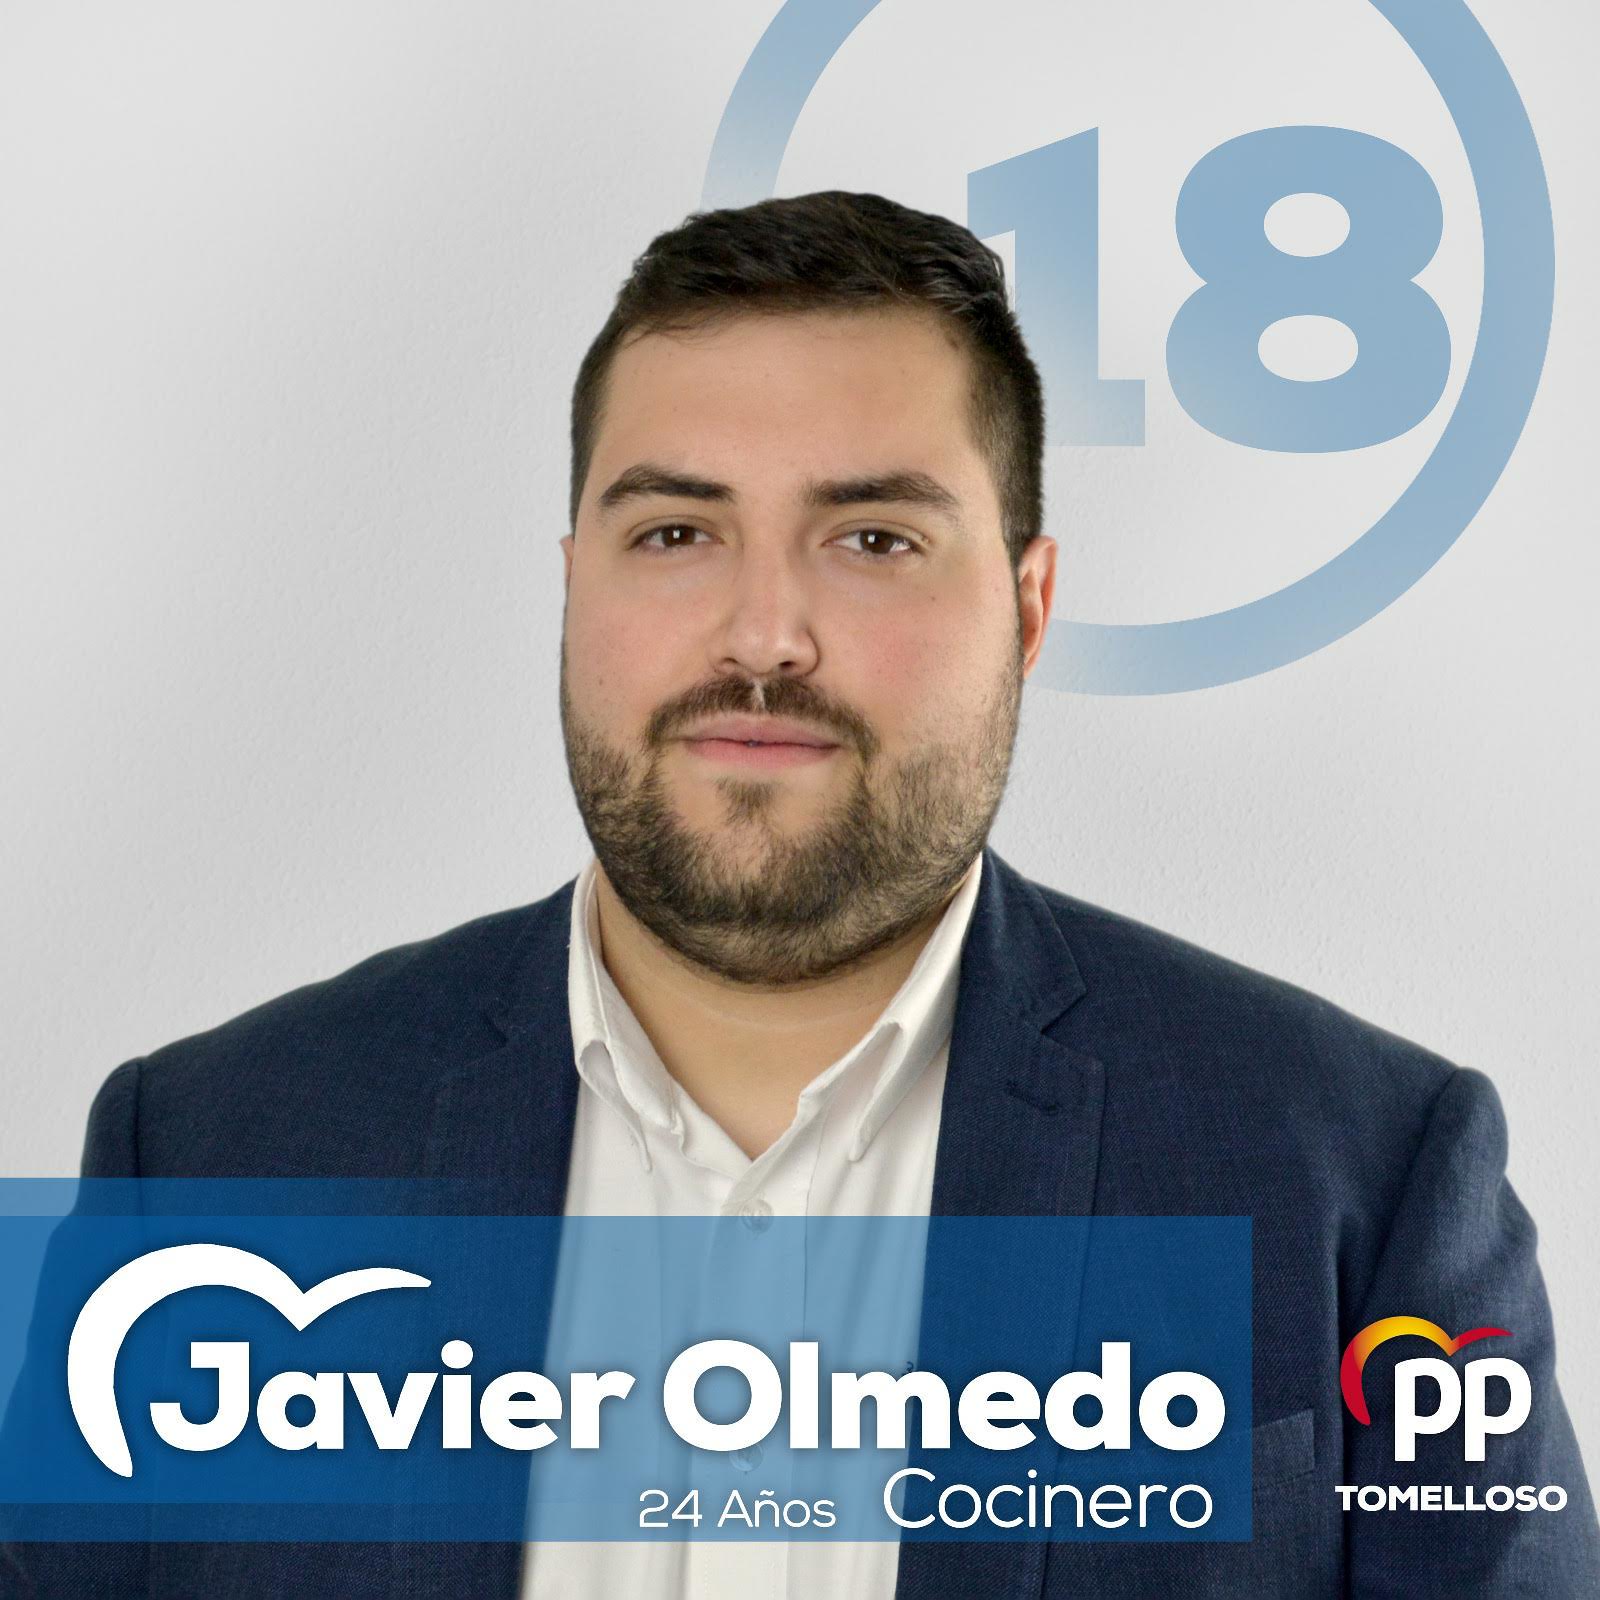 javier-olmedo-pp-tomelloso